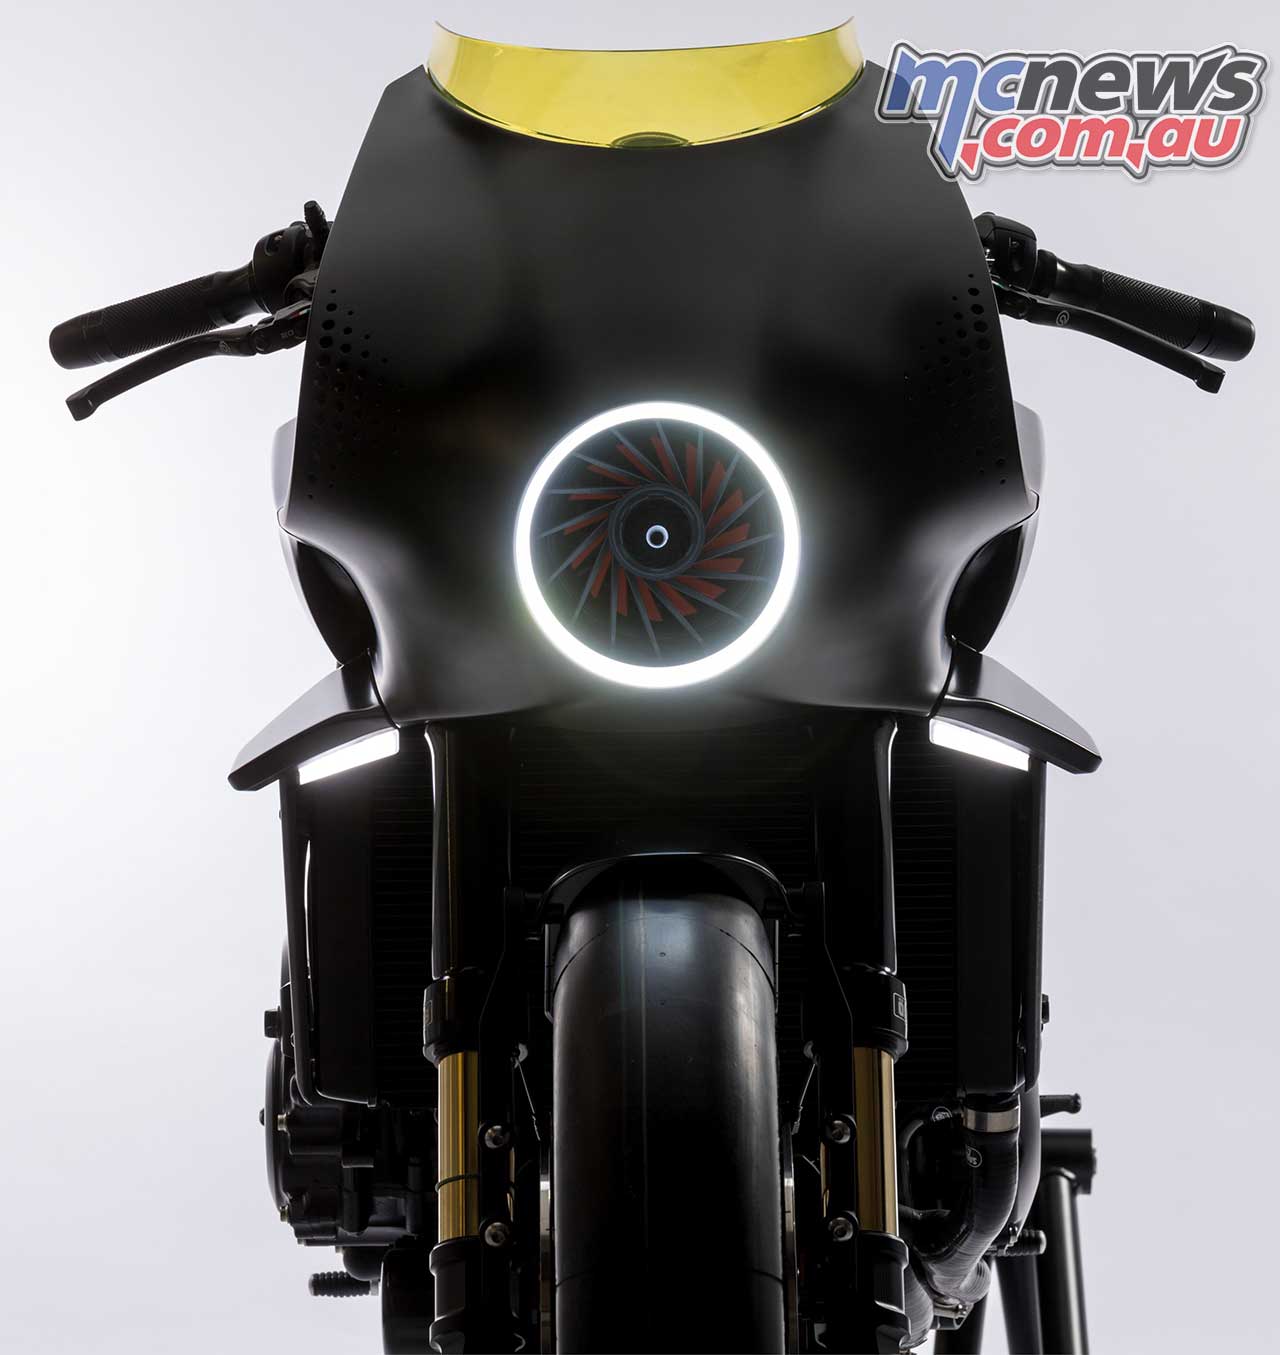 Honda Cb4 Interceptor Concept At Eicma Motorcycle News Sport And Reviews